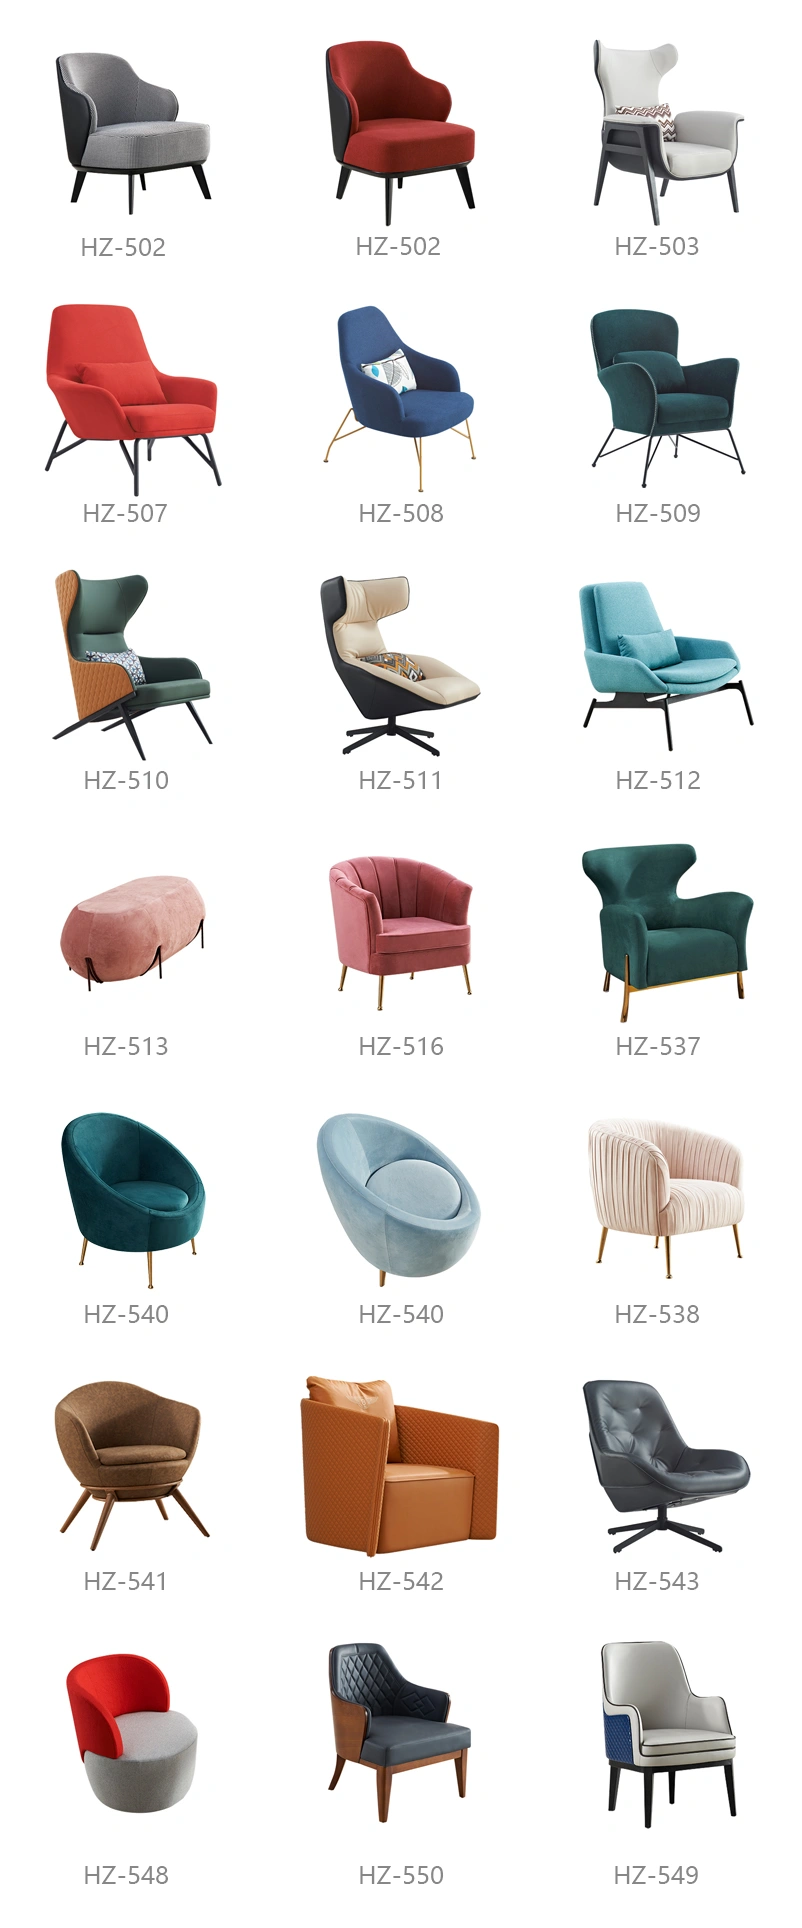 Modern Design Sofa Lounge Living Room Furniture Leather Vita Eames Chair with Ottoman